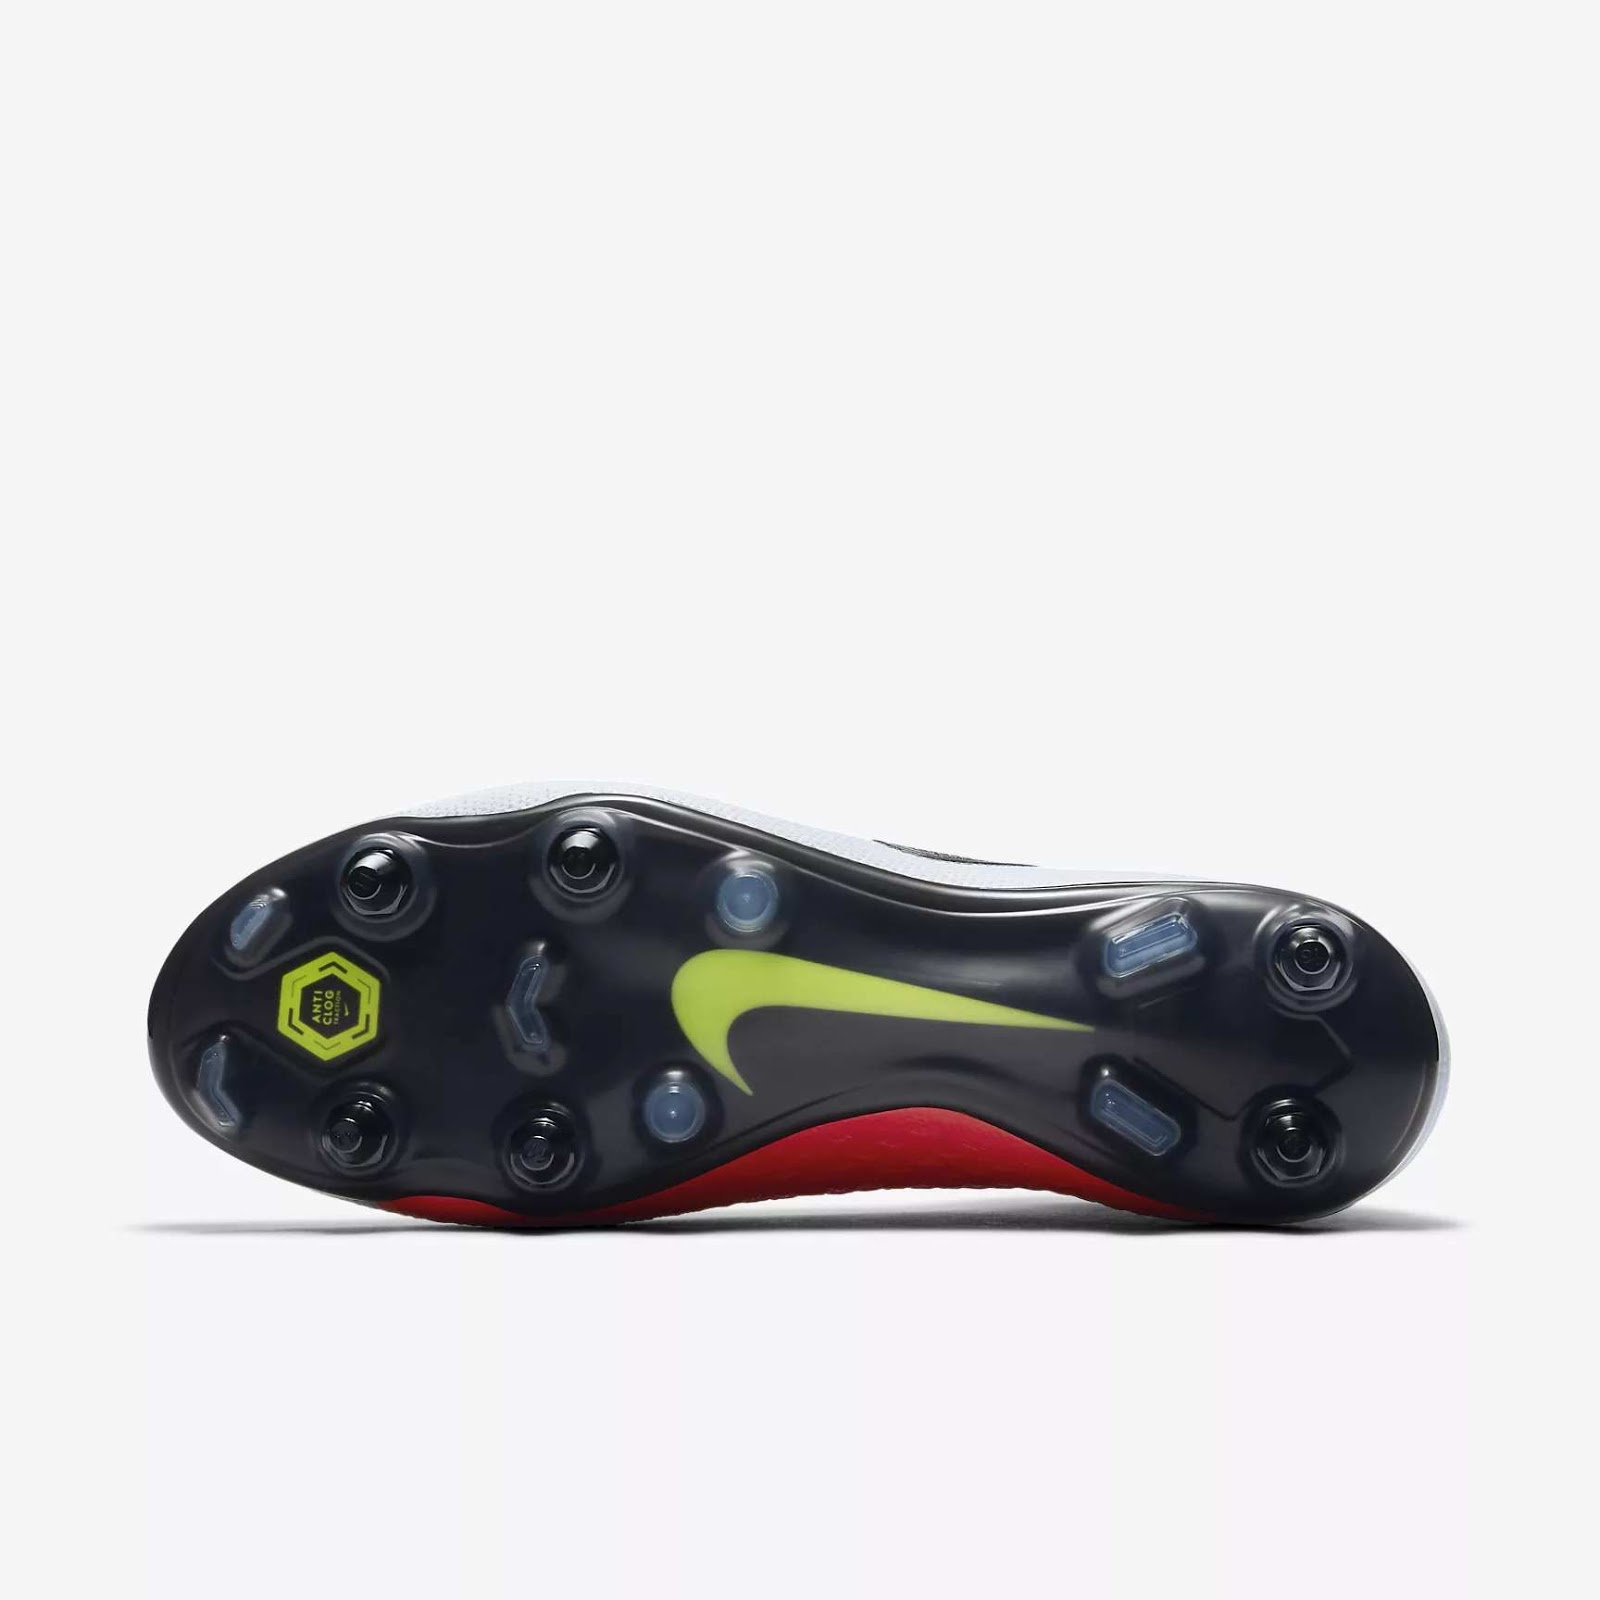 Compare All Nike Phantom Vision Boots Sole Types - FG vs AG vs SG-Pro ...